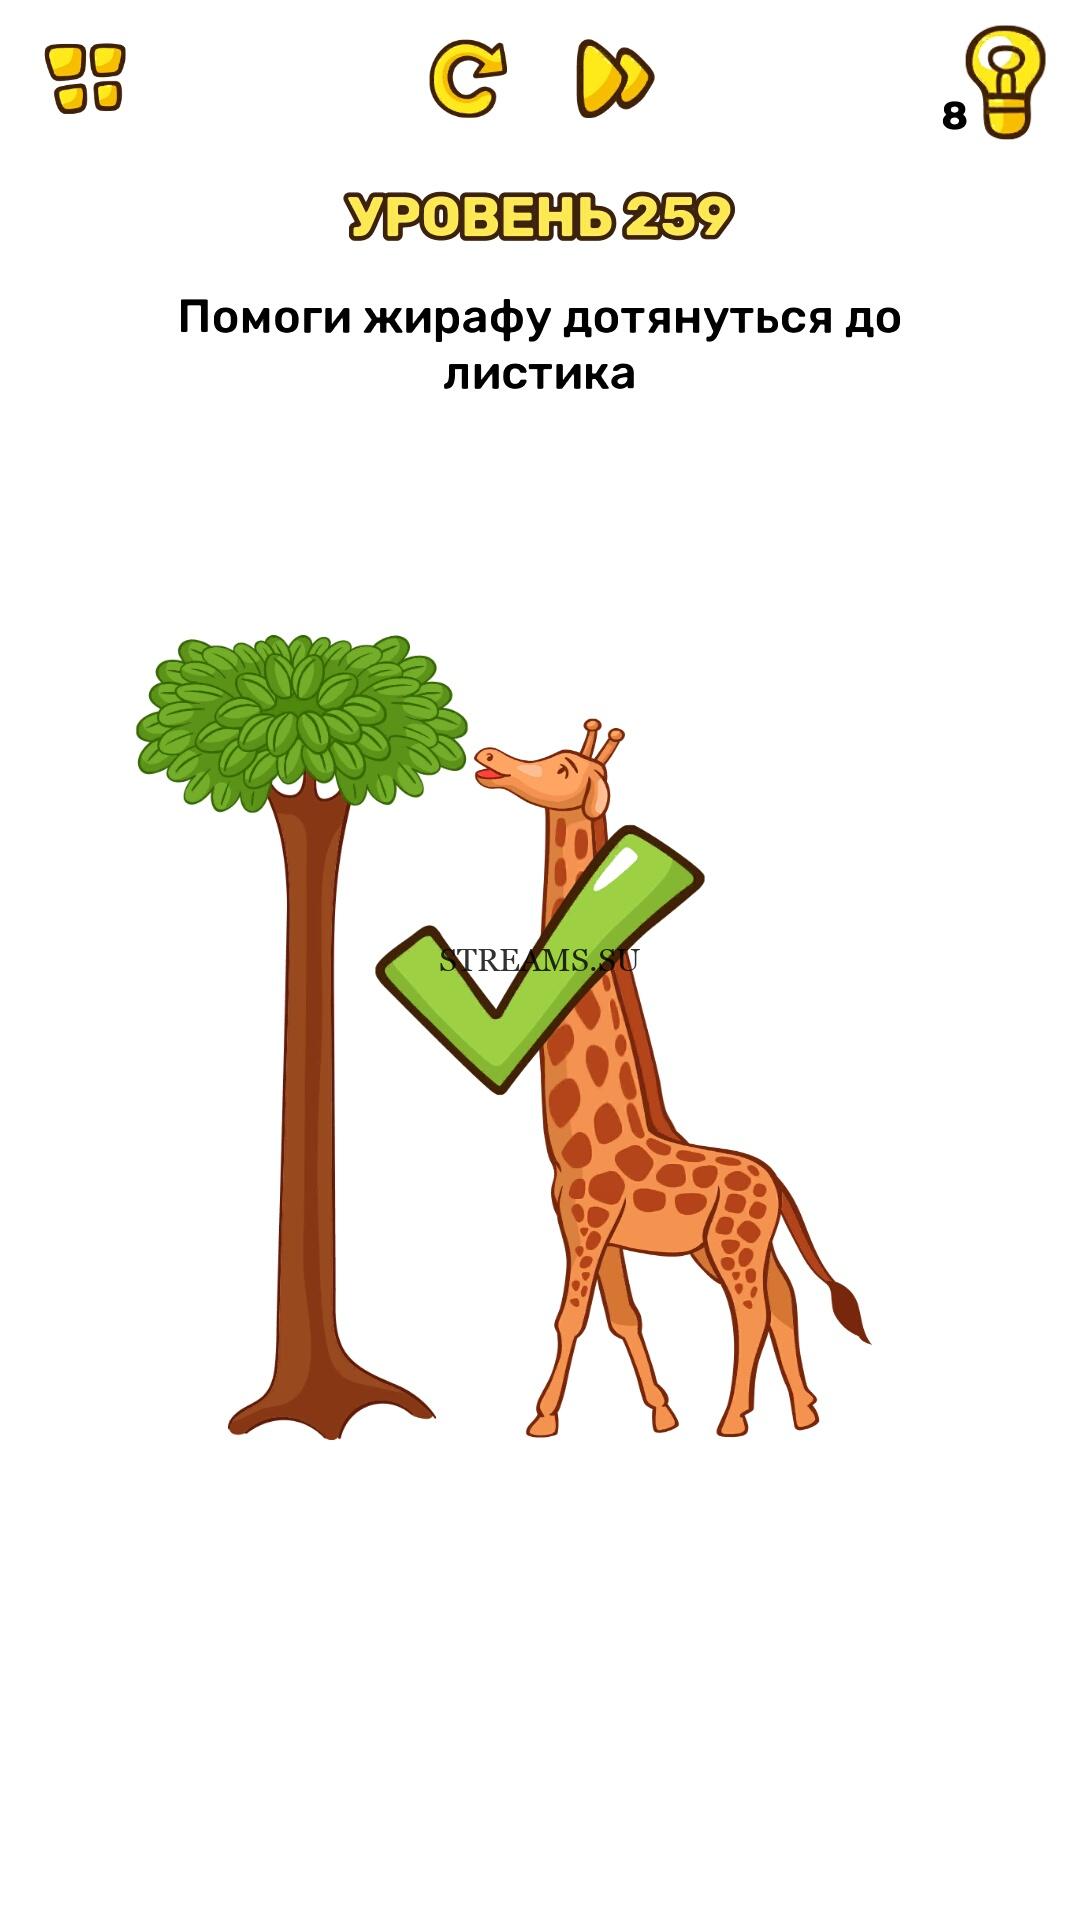 Brain 259. Жираф помогает жирафу. Жираф дотягивается до растений. 259 Уровень Brain тест. Жираф дотянулся до земли.